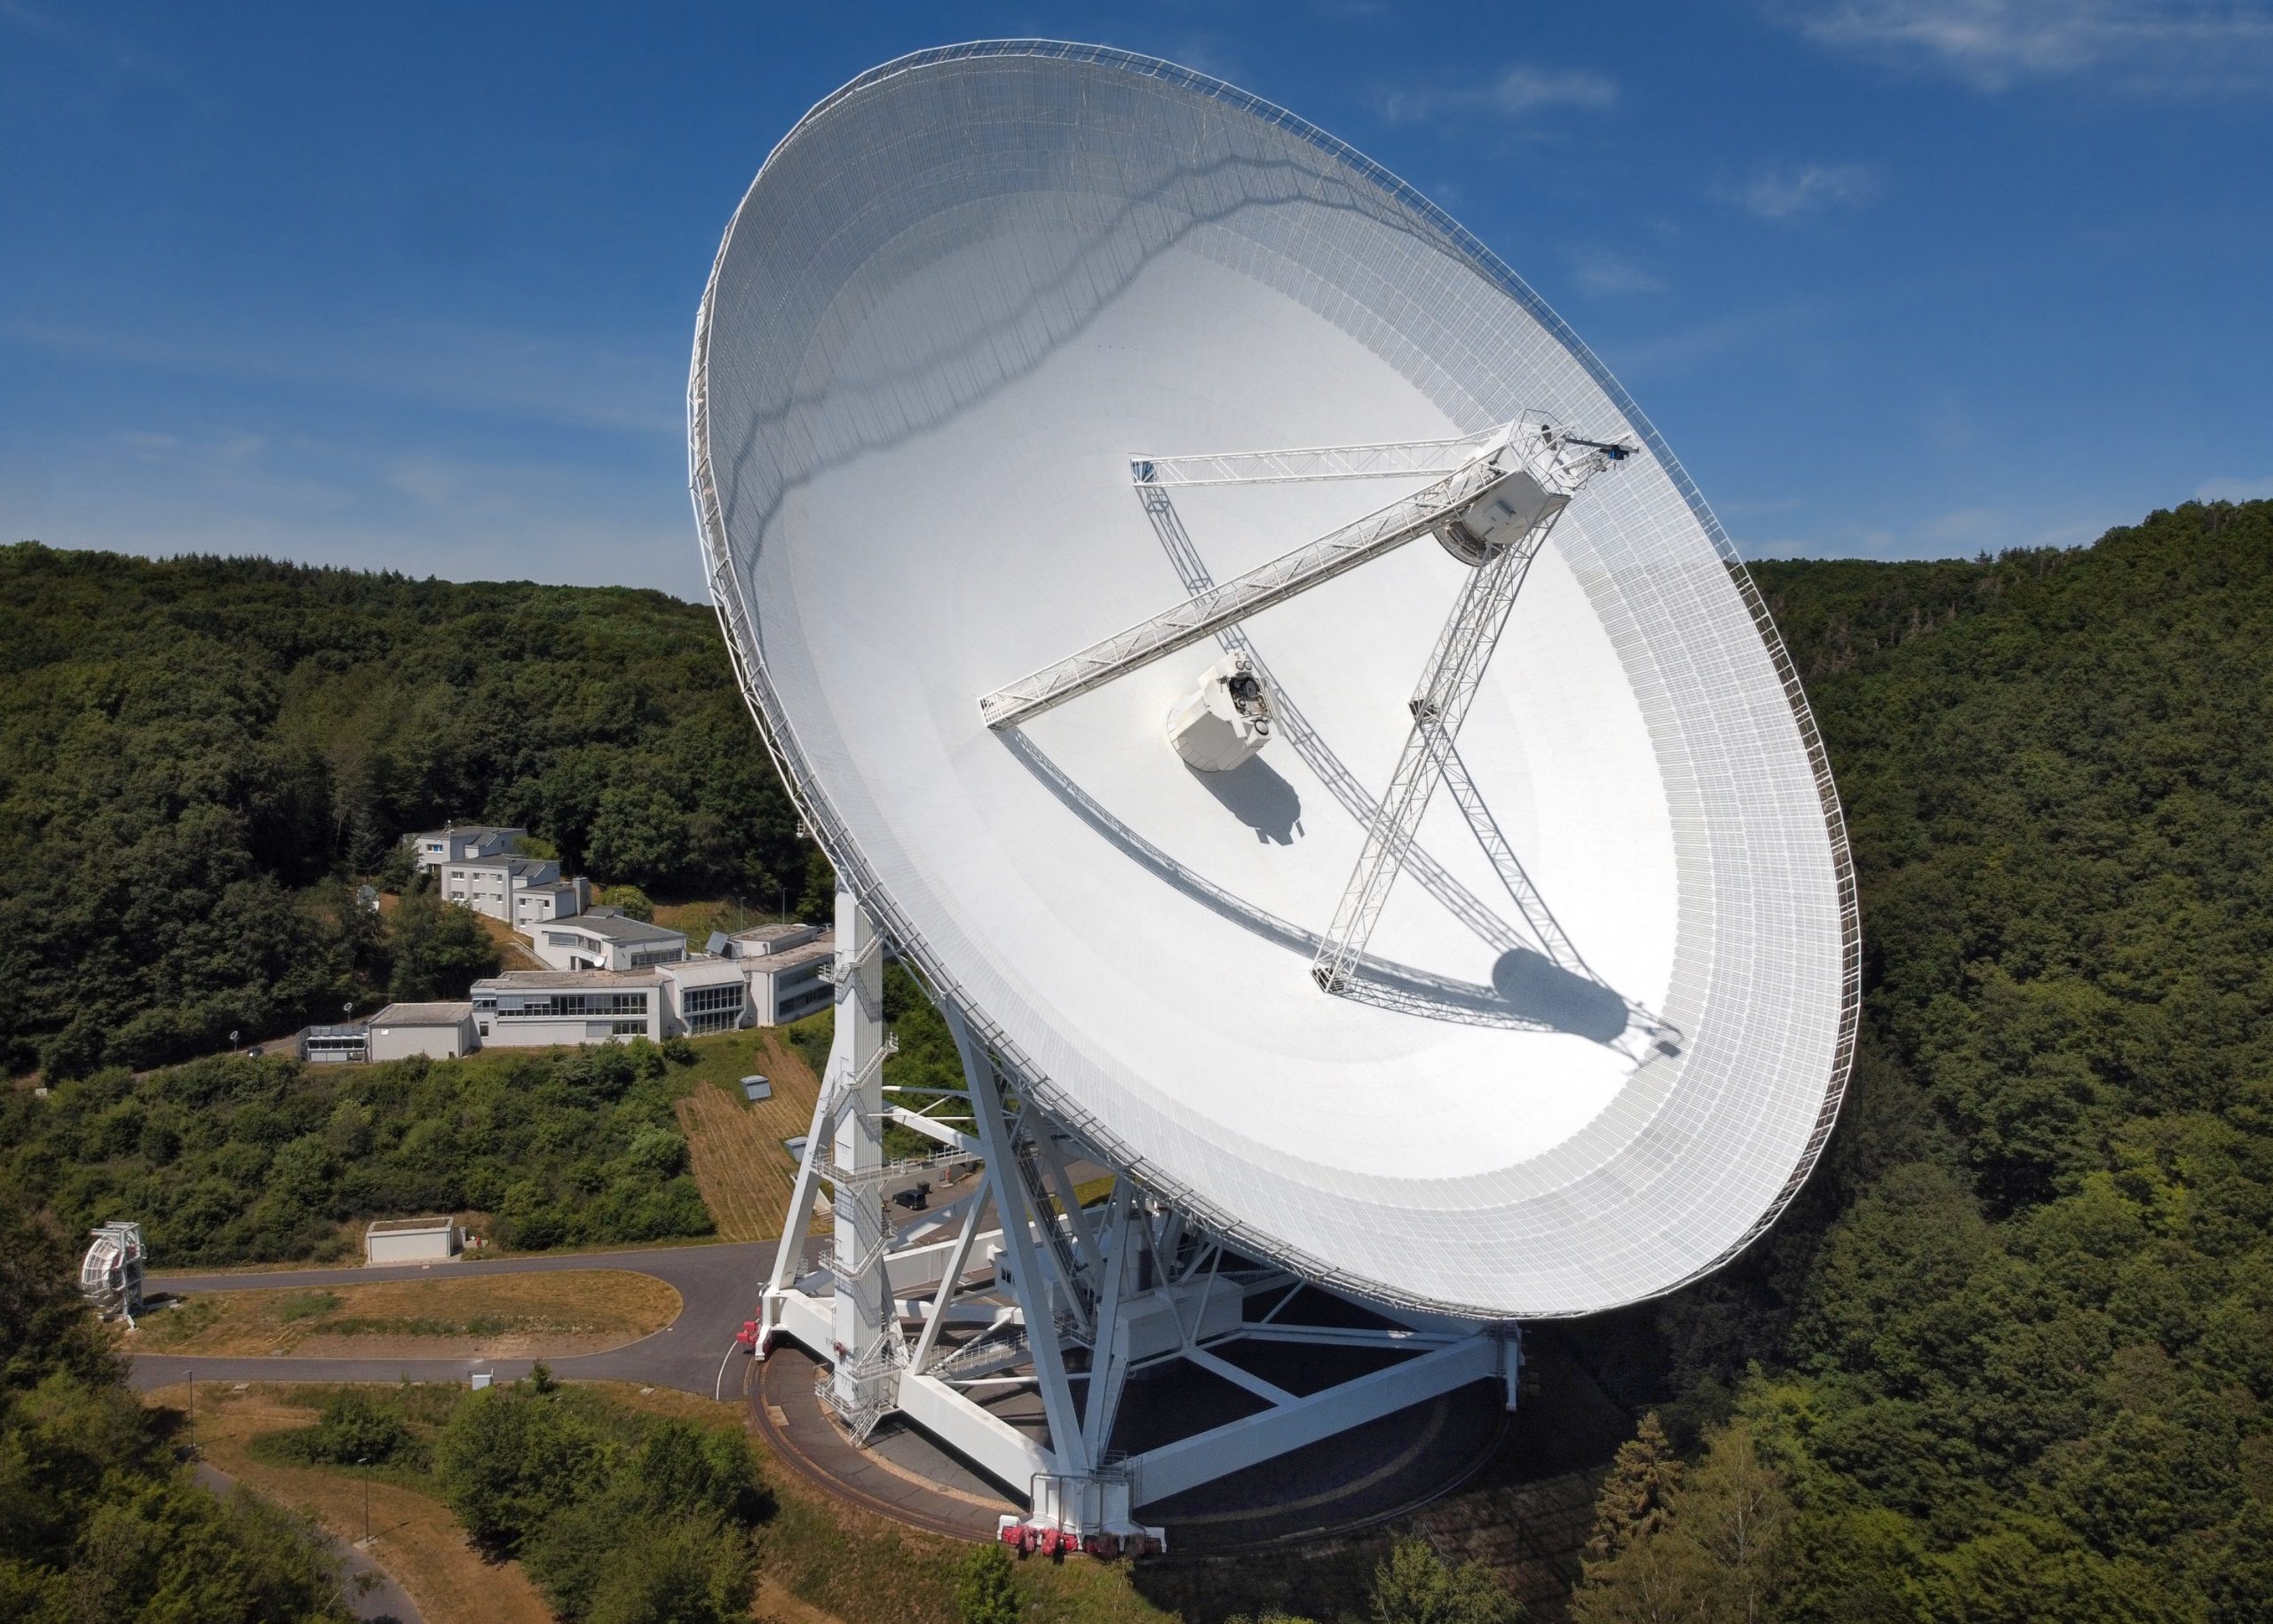 Eiffelberg Radio Telescope - 50 years of cutting-edge research at the Eiffel